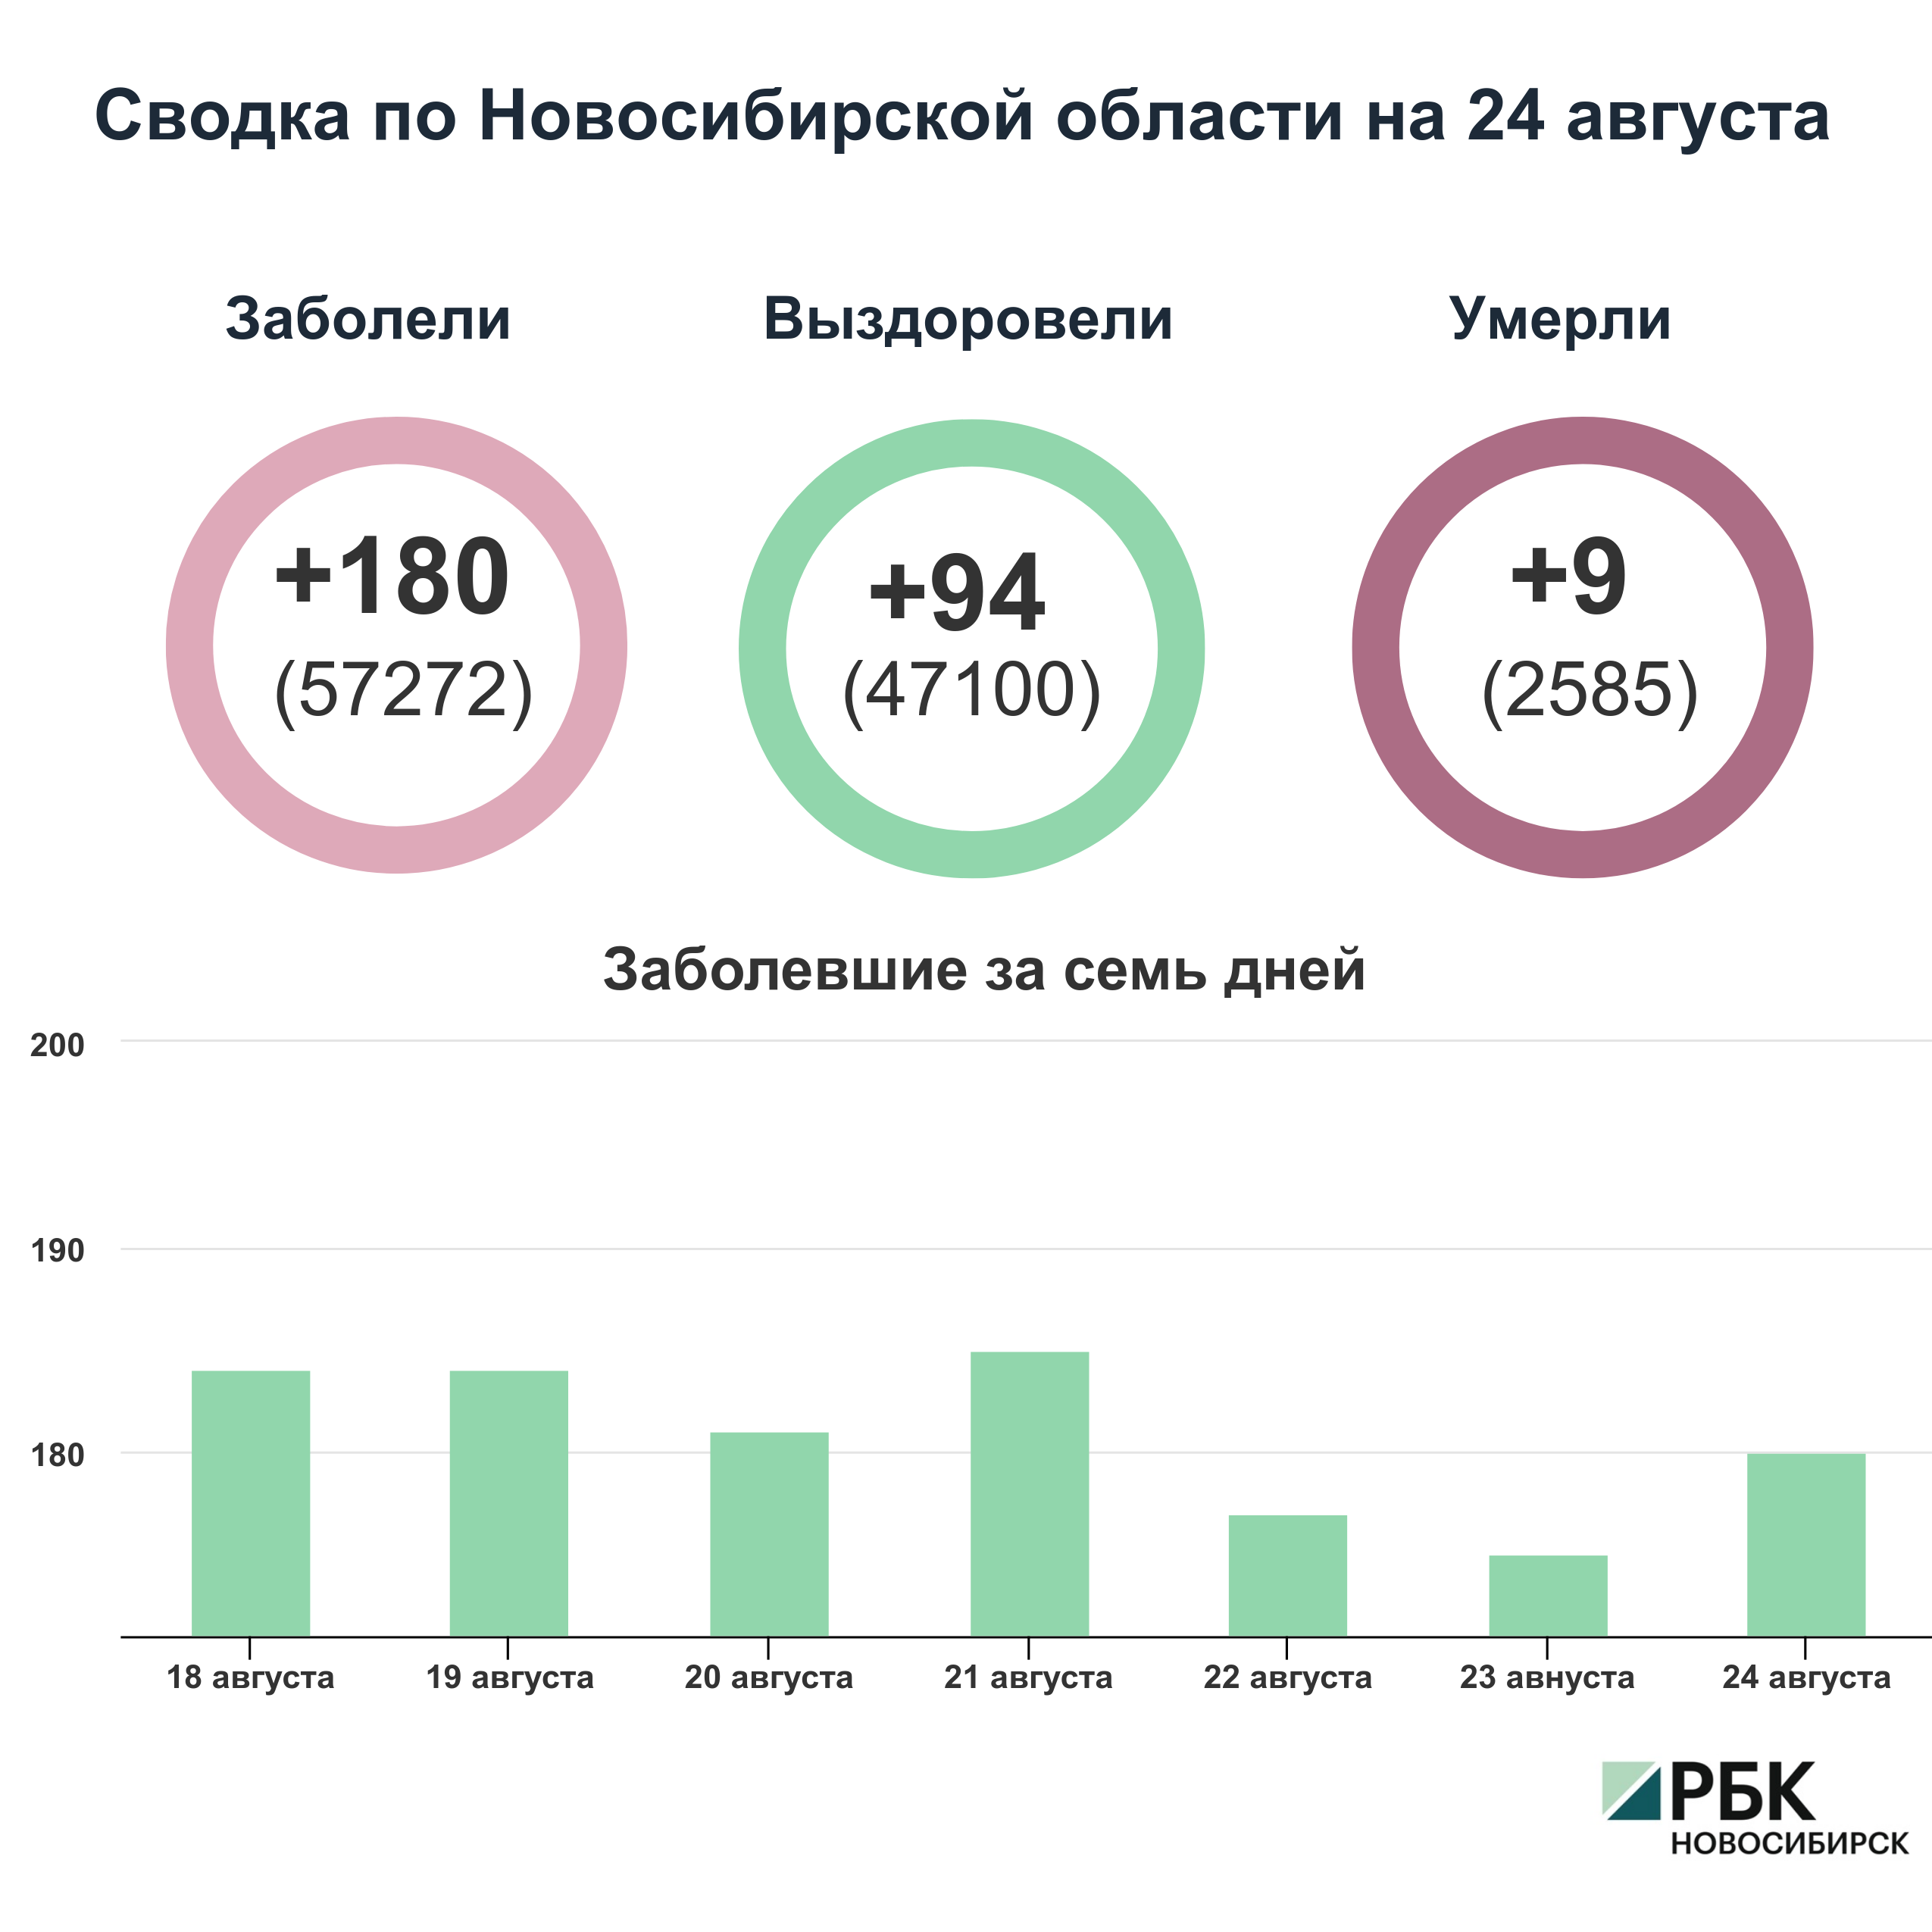 Коронавирус в Новосибирске: сводка на 24 августа